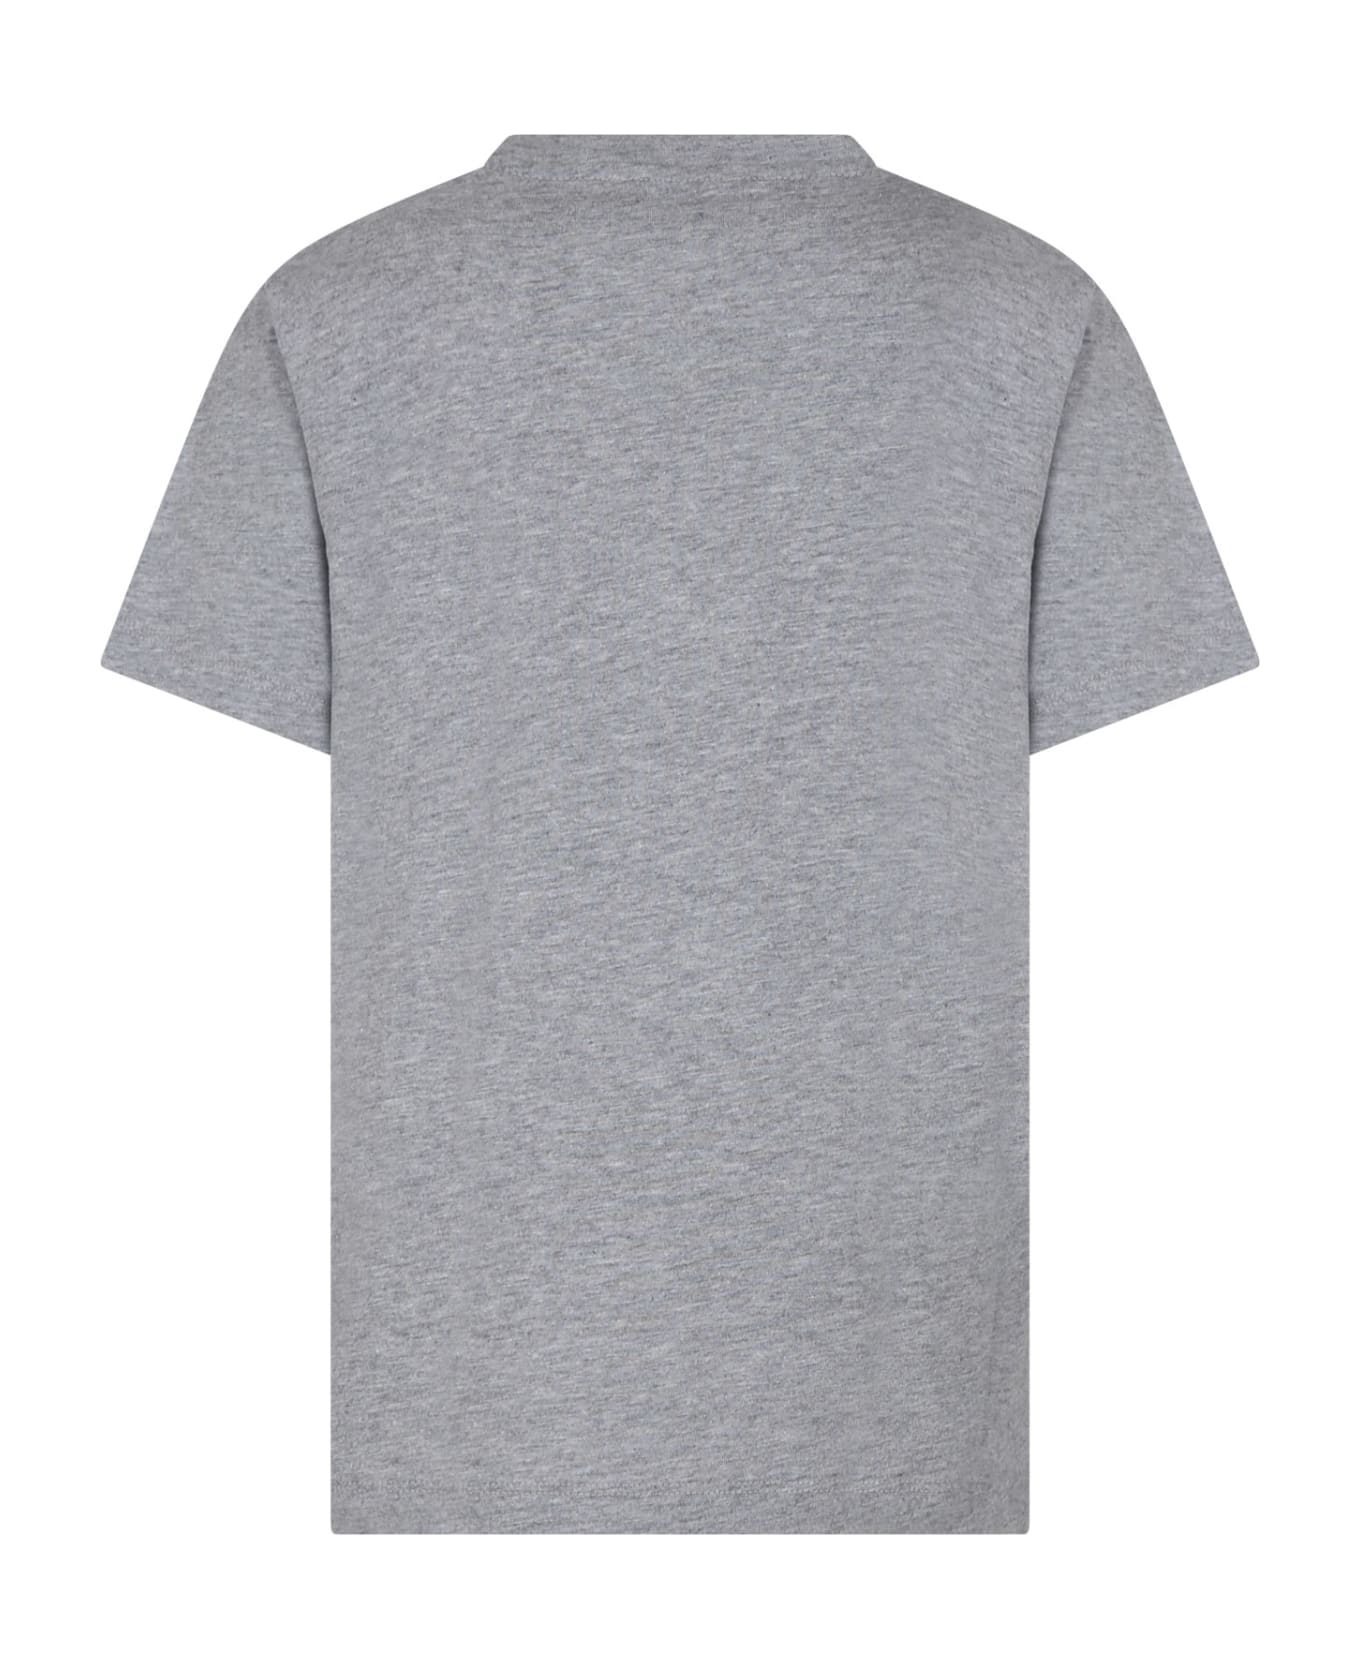 Versace Grey T-shirt For Boy With Medusa - Grey